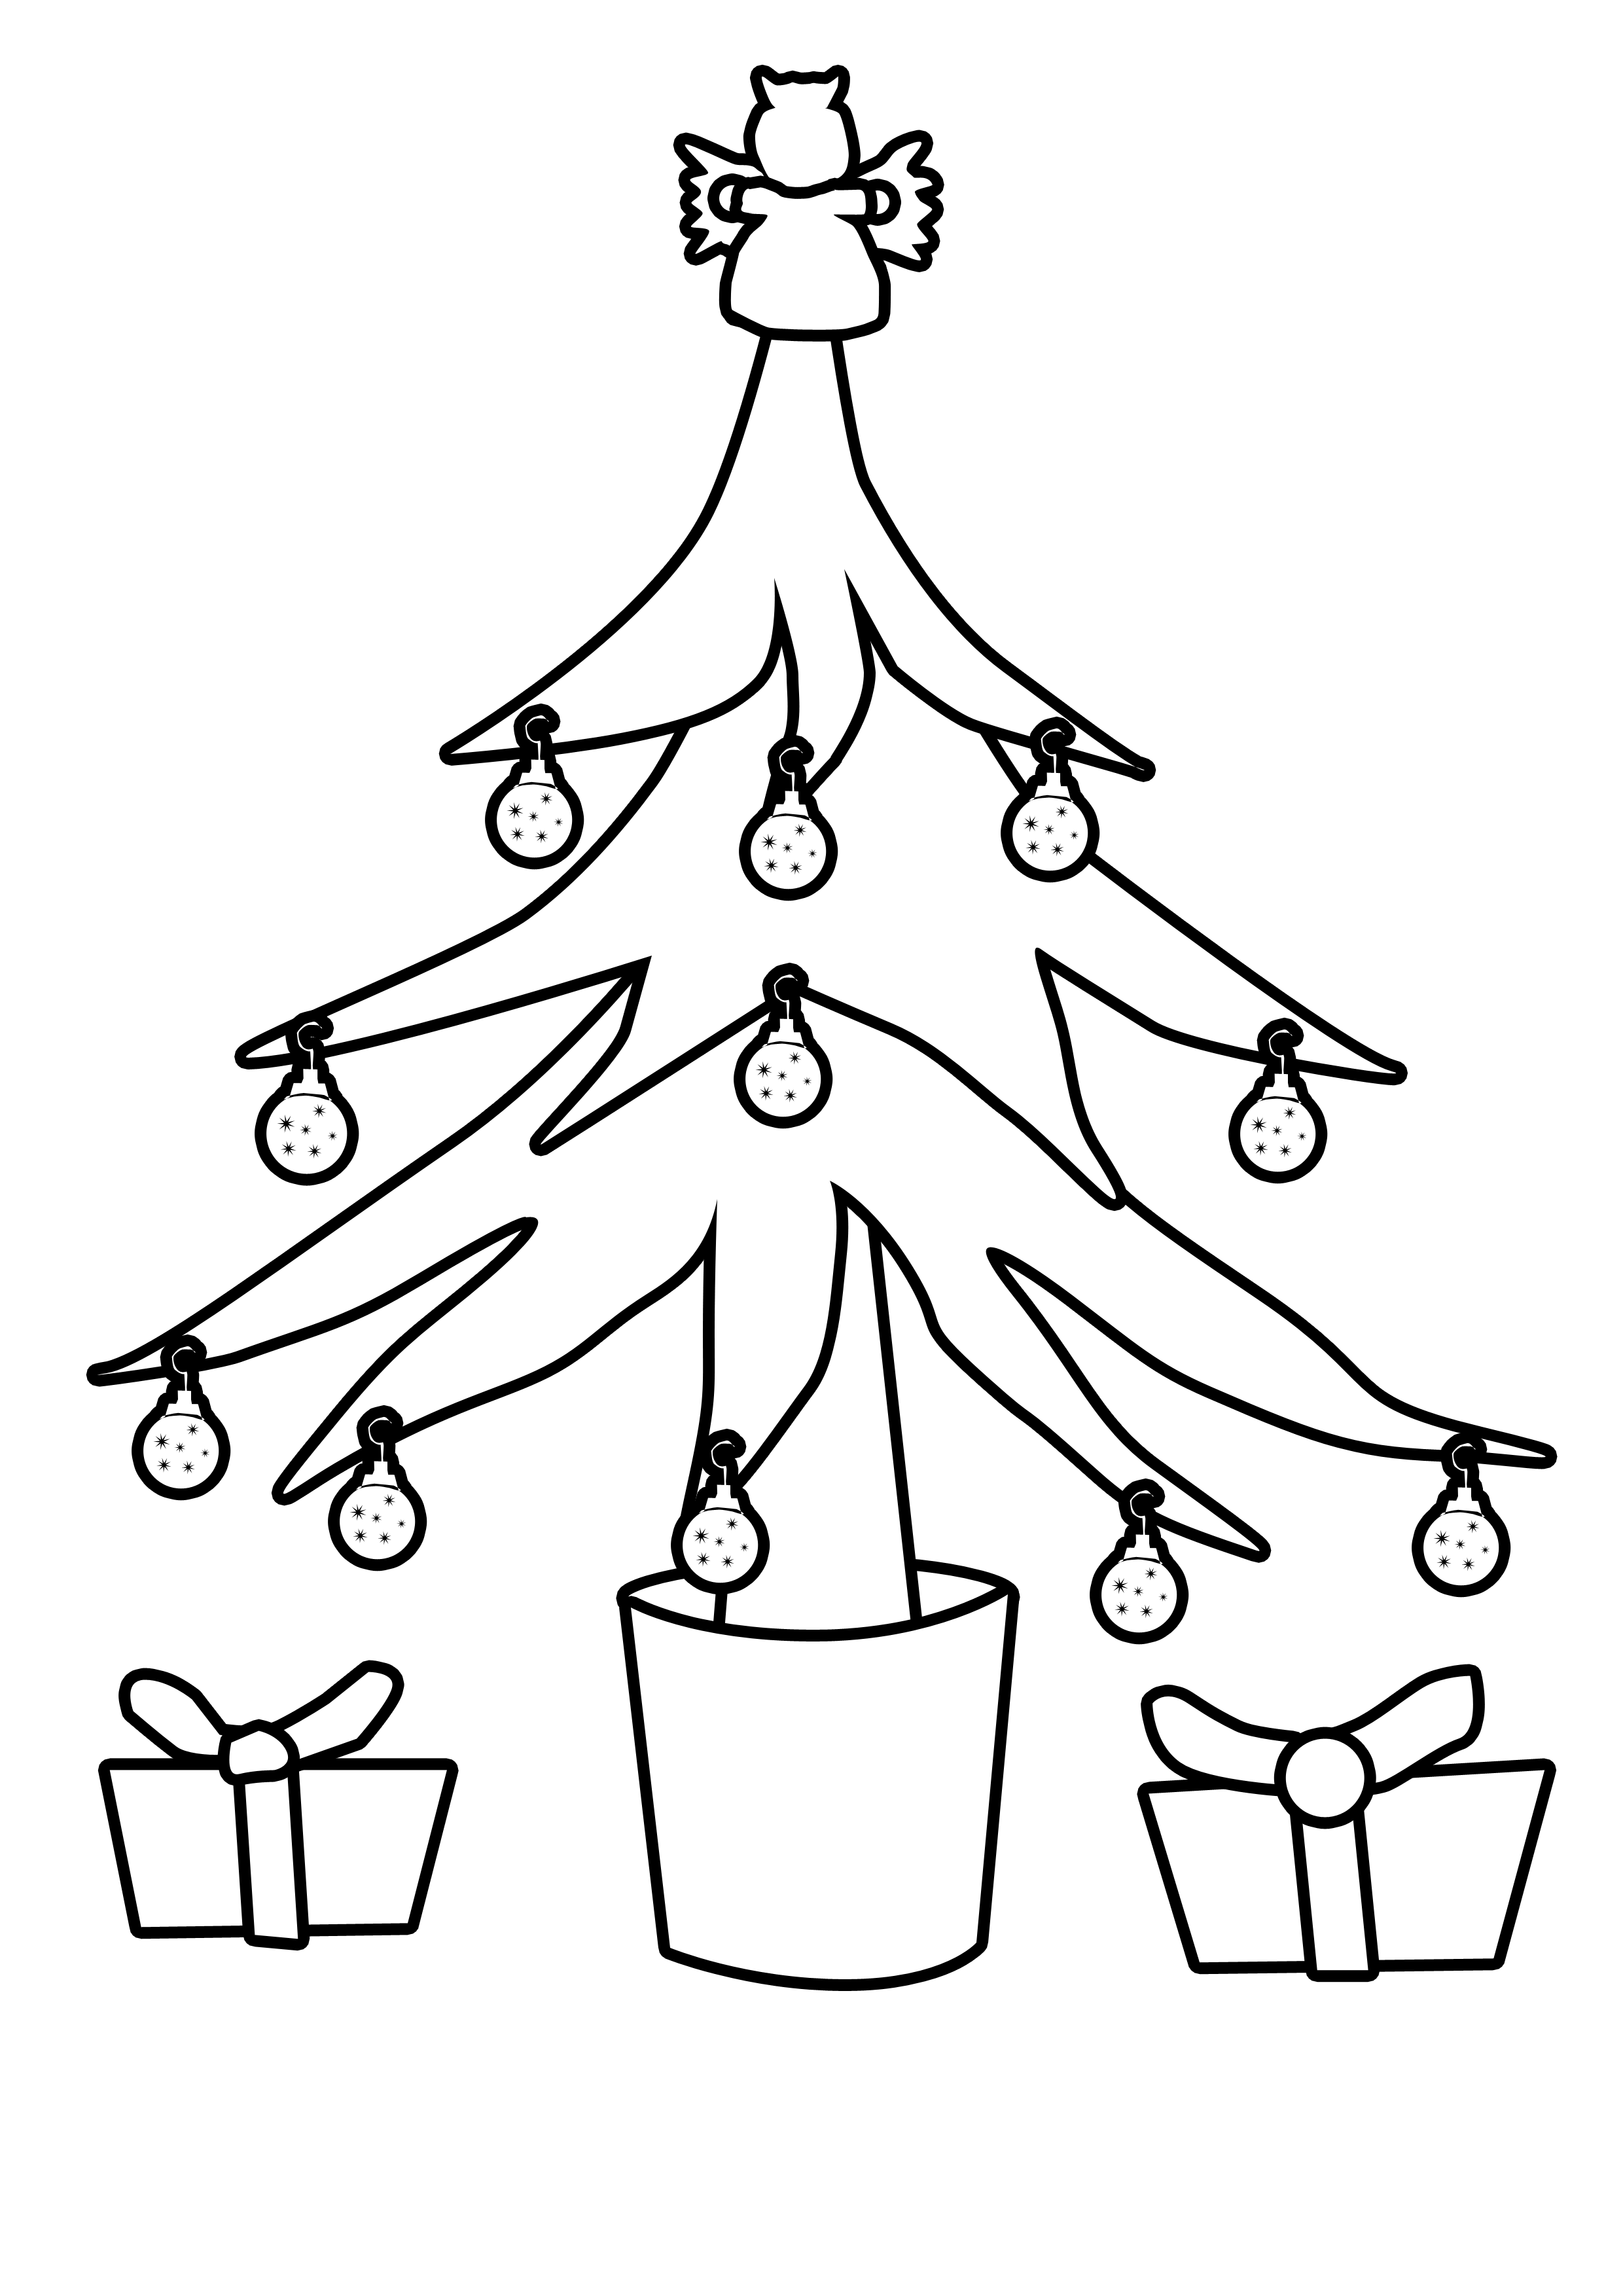 Christmas Tree Silhouette Clip Art - ClipArt Best